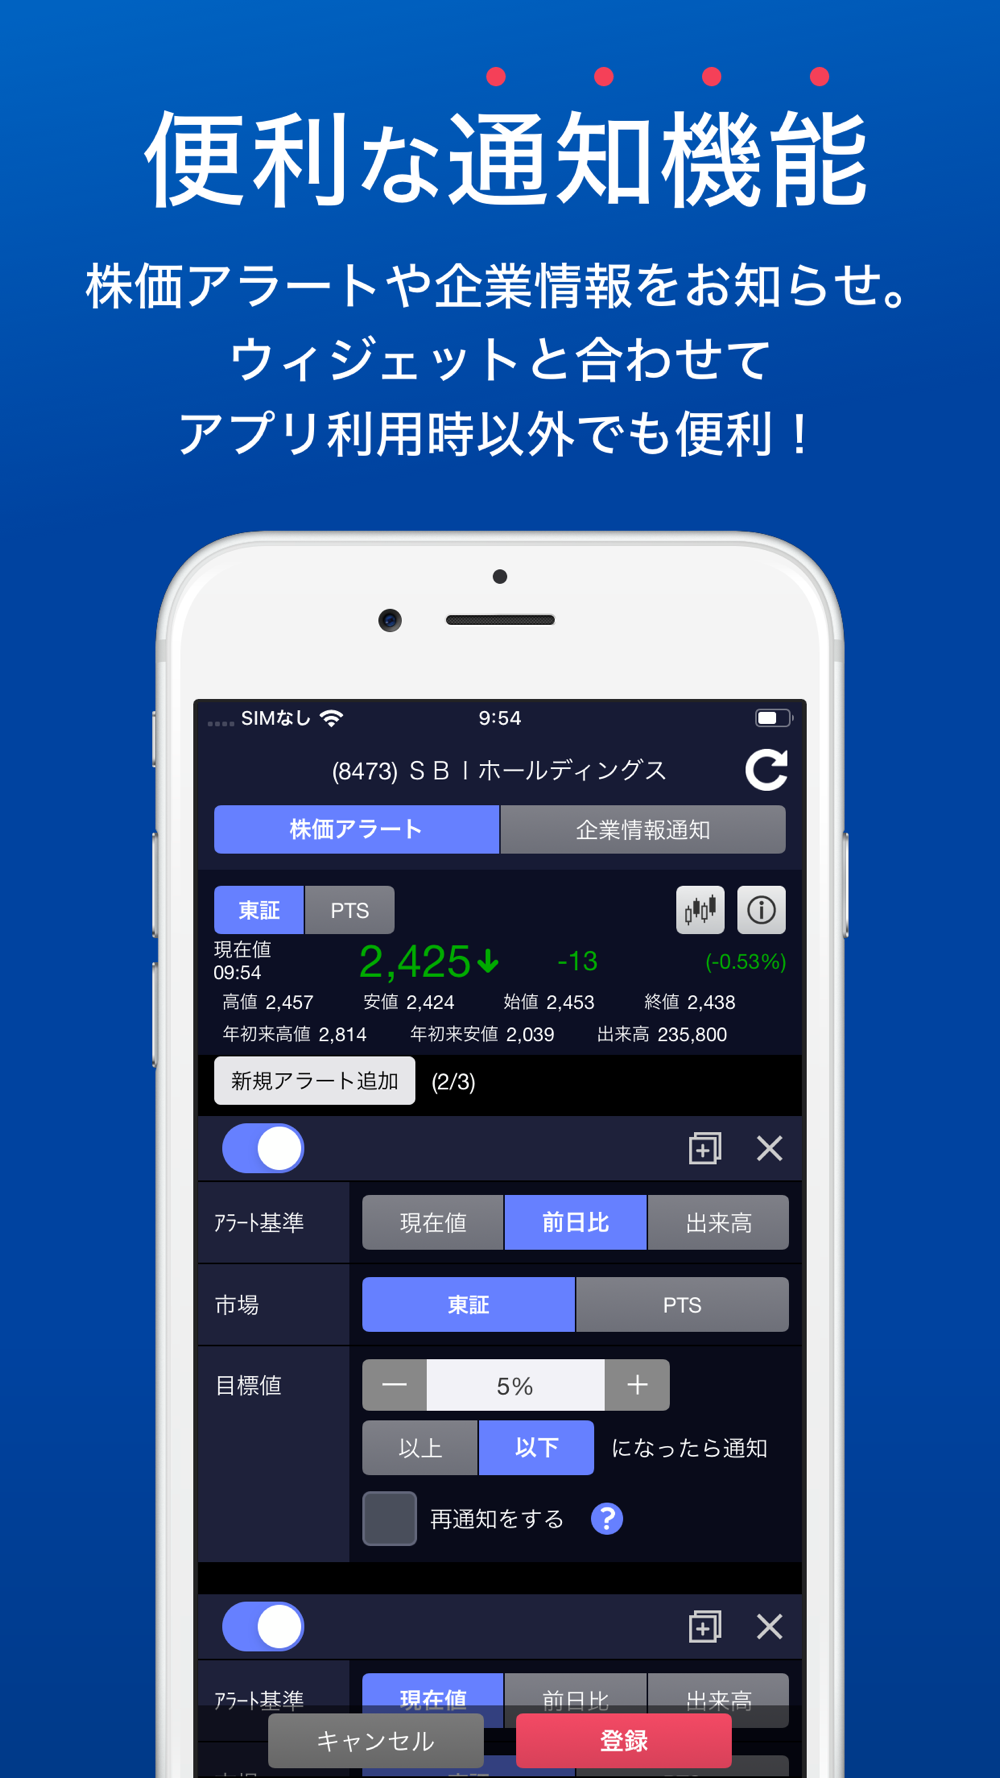 Sbi証券 株 アプリ 株価 投資情報 Free Download App For Iphone Steprimo Com